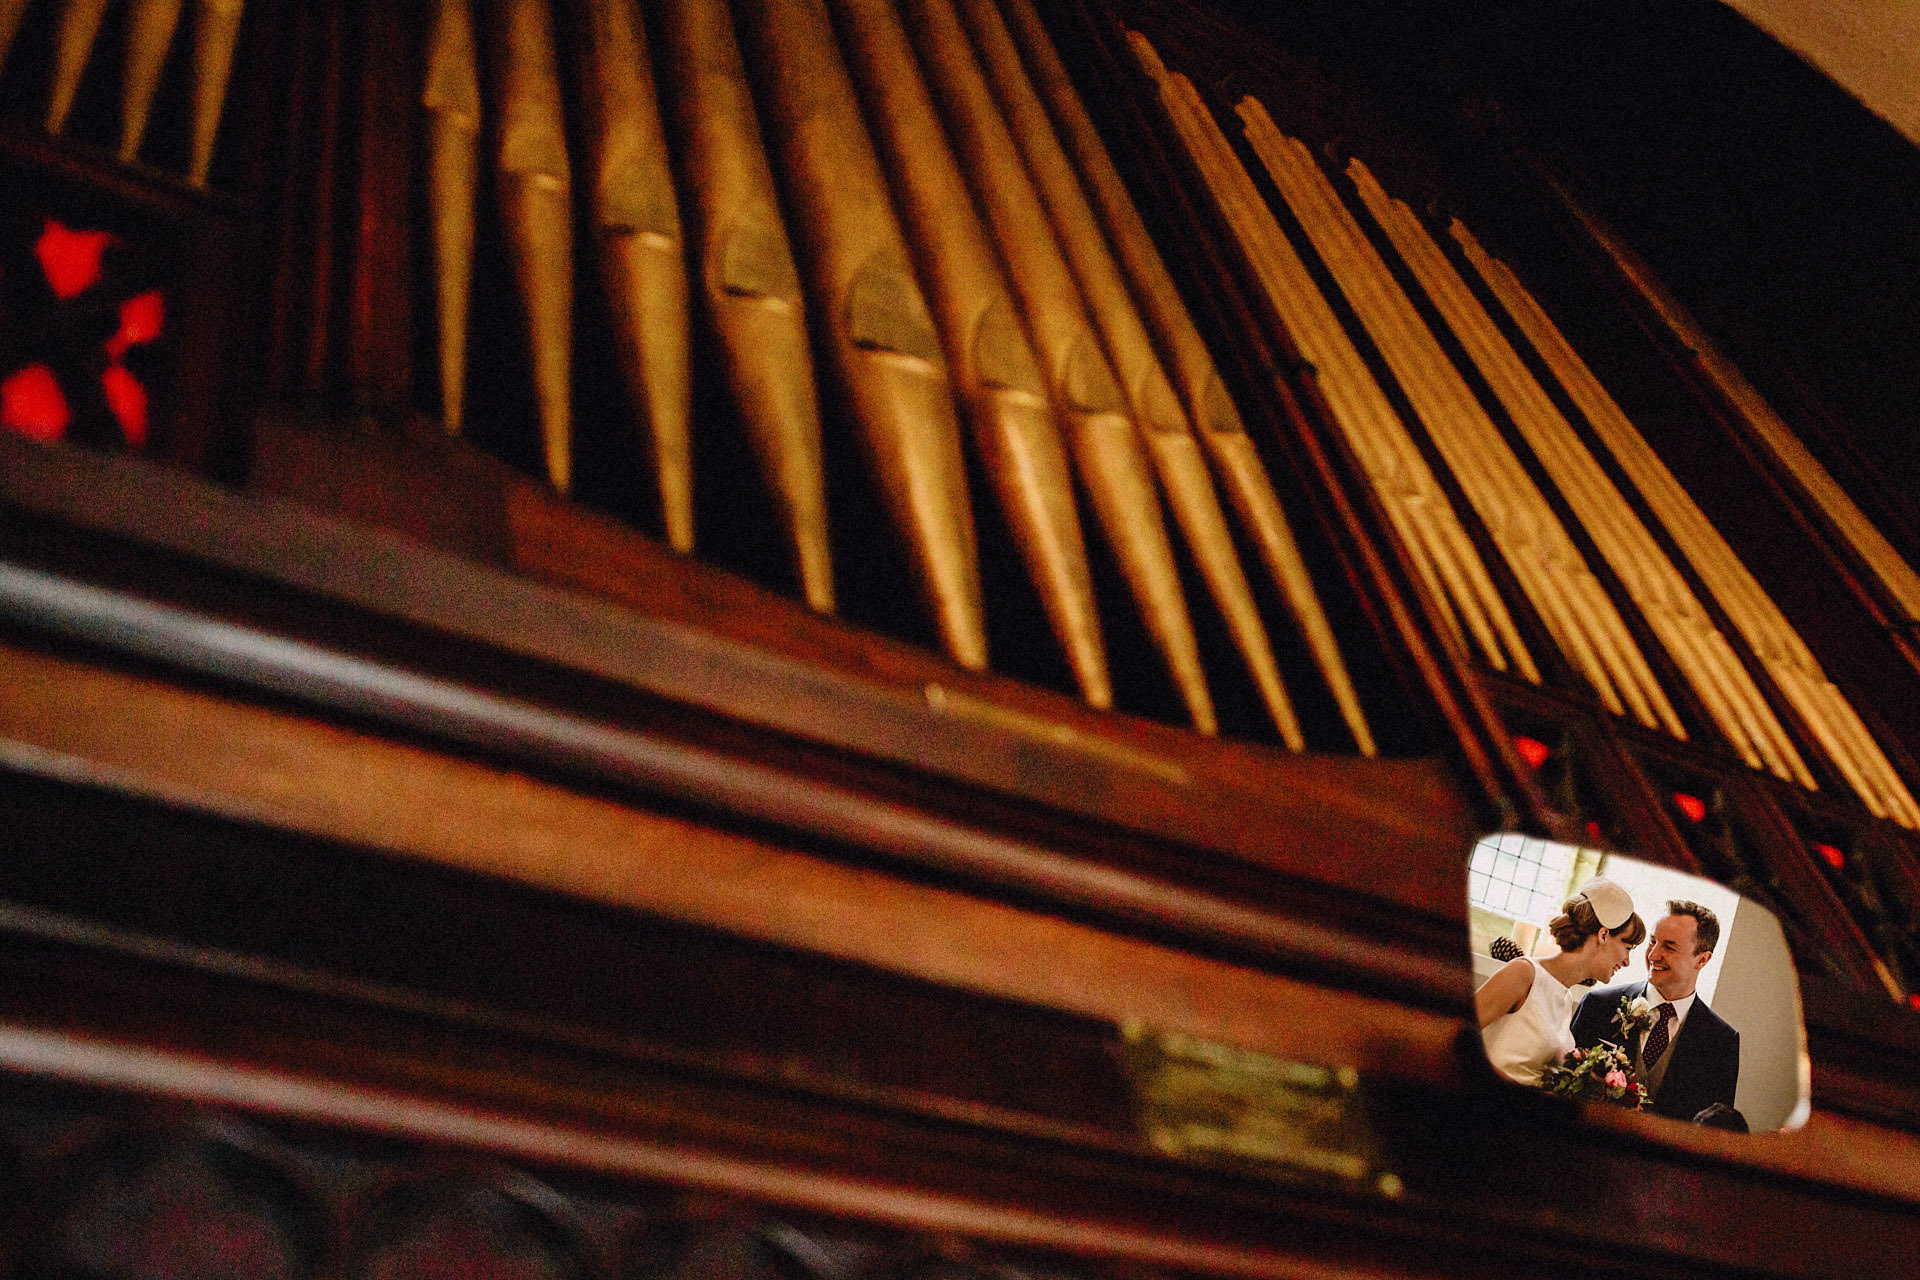 church organ and miror